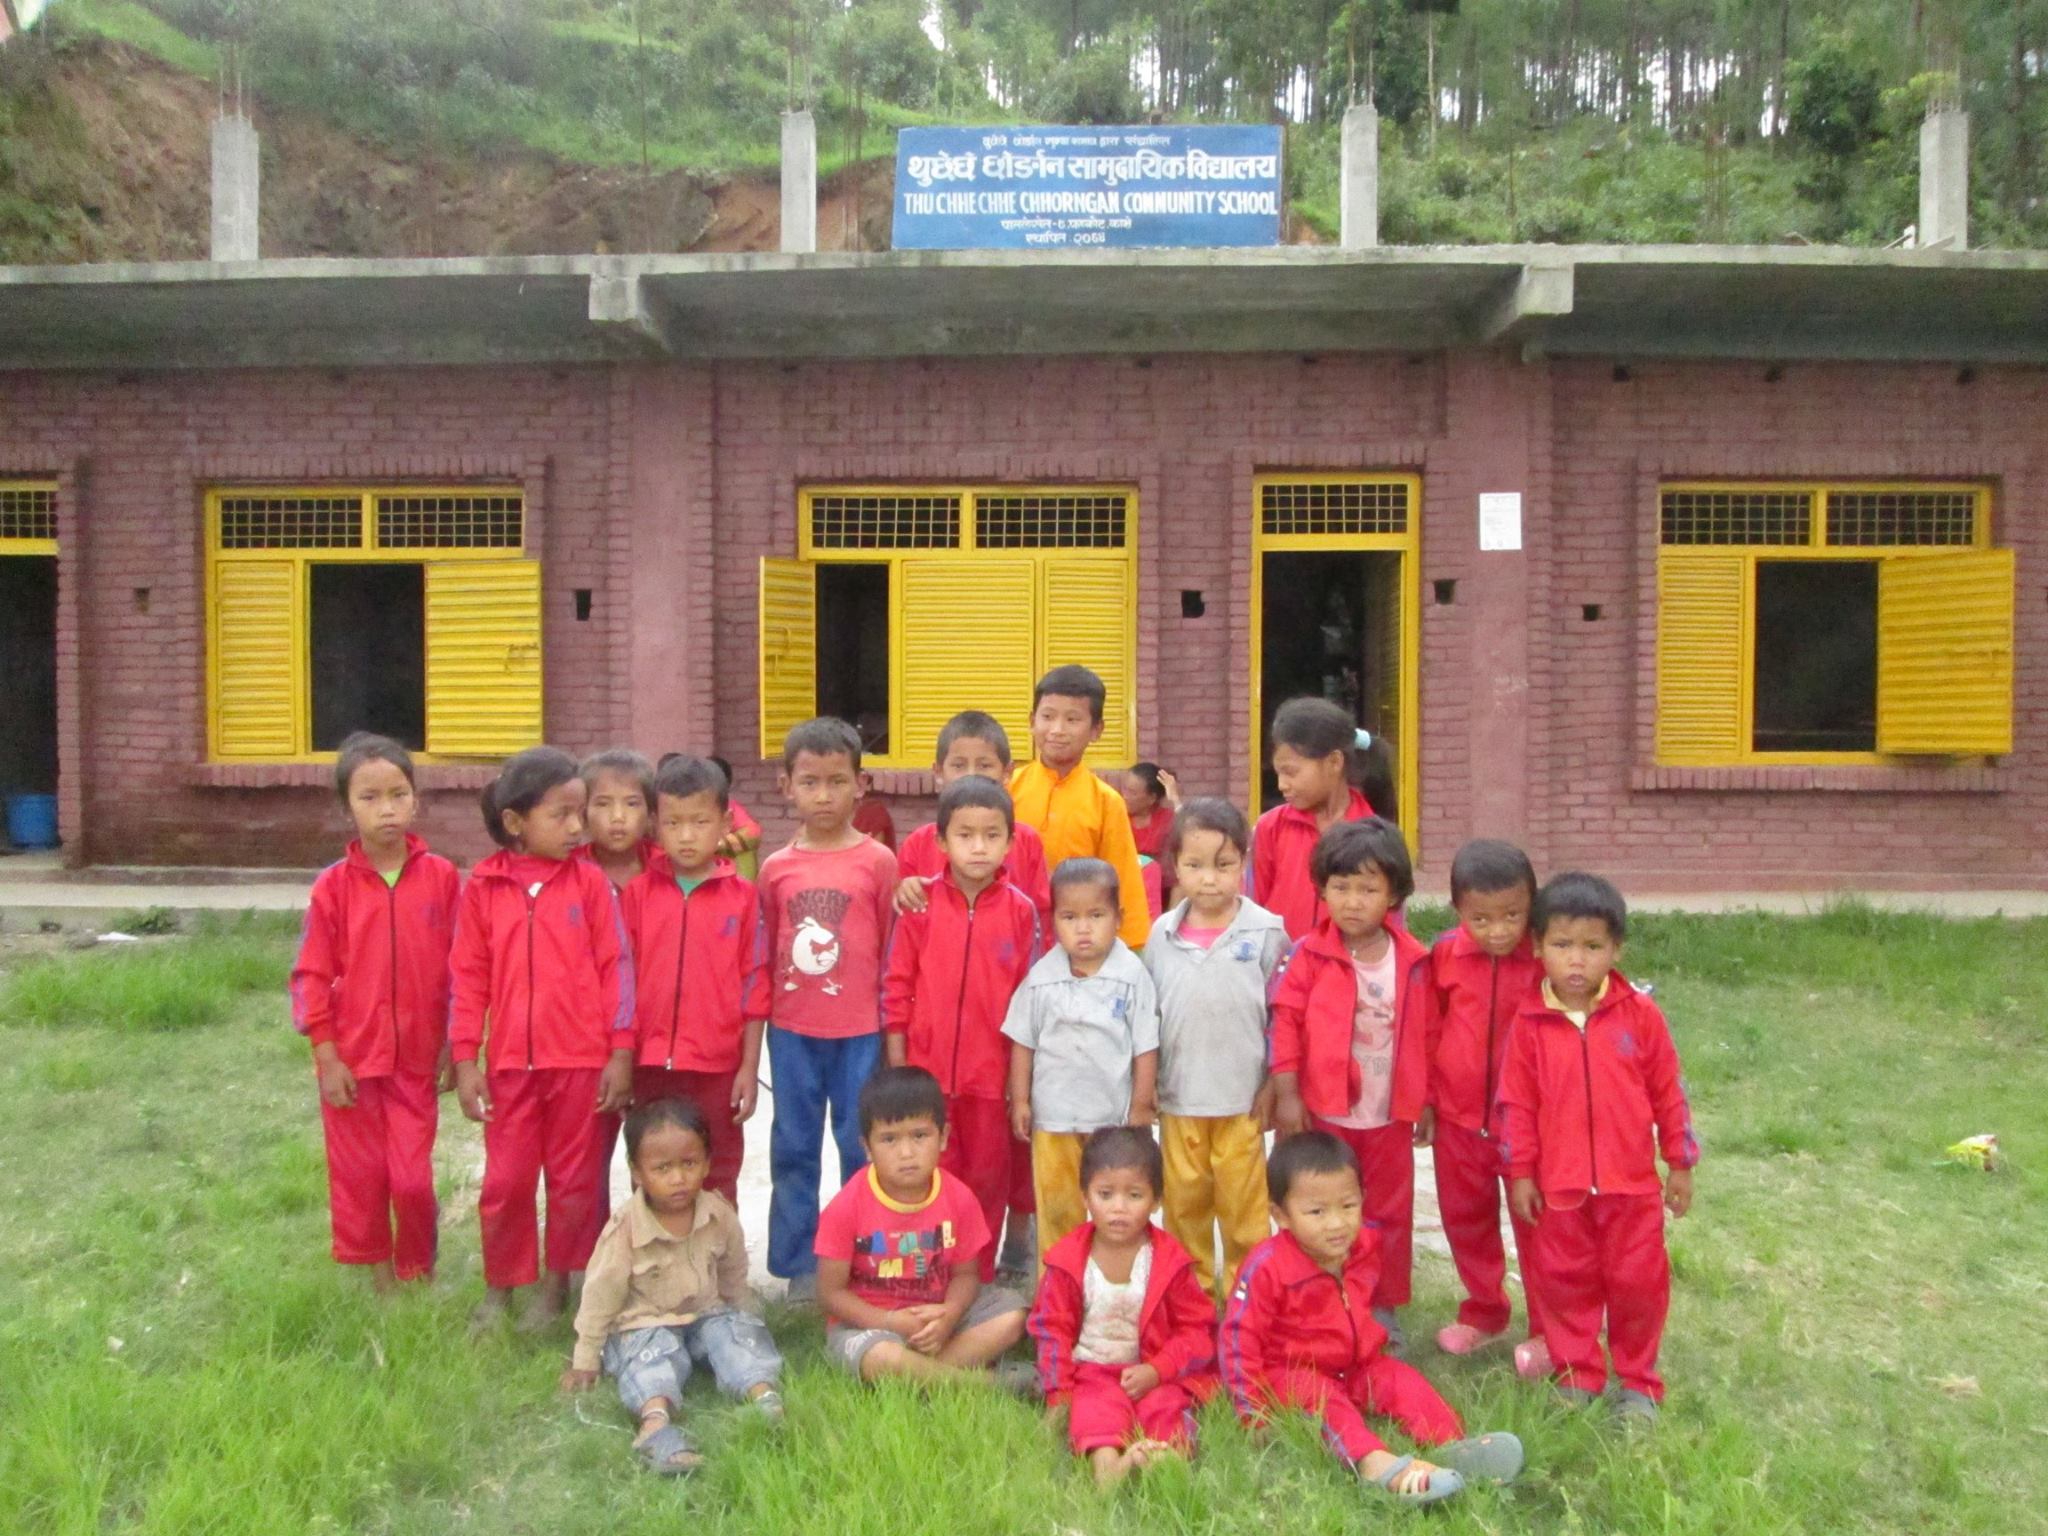 Nutrition Assessment in Thu Chhe Chhe Chhorngan Community School, Kavre District